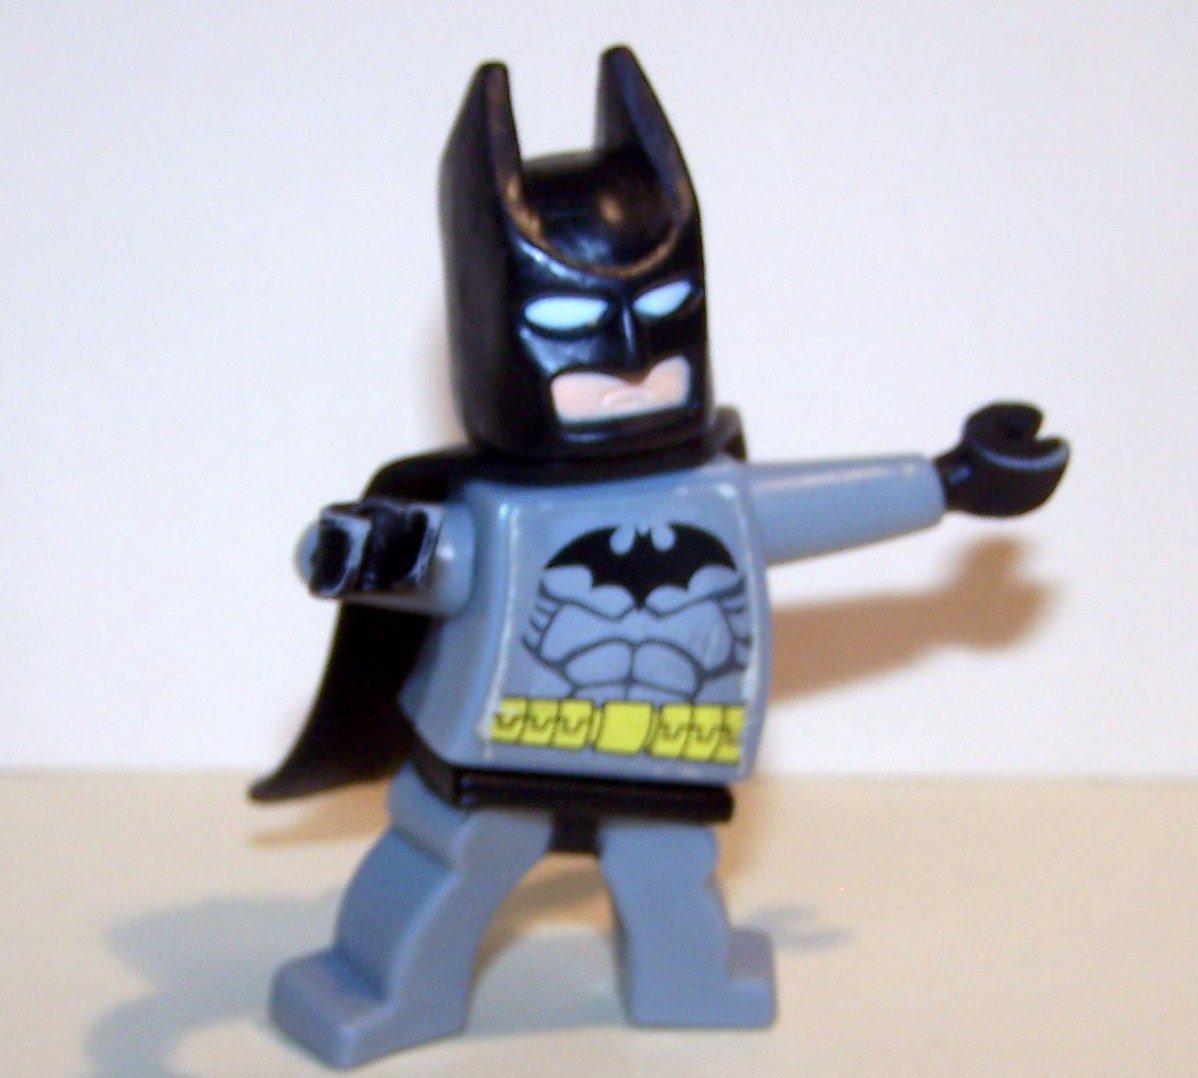 LEGO BATMAN MCDONALDS 3” ACTION FIGURE ABS PLASTIC TOY (PRE- OWNED